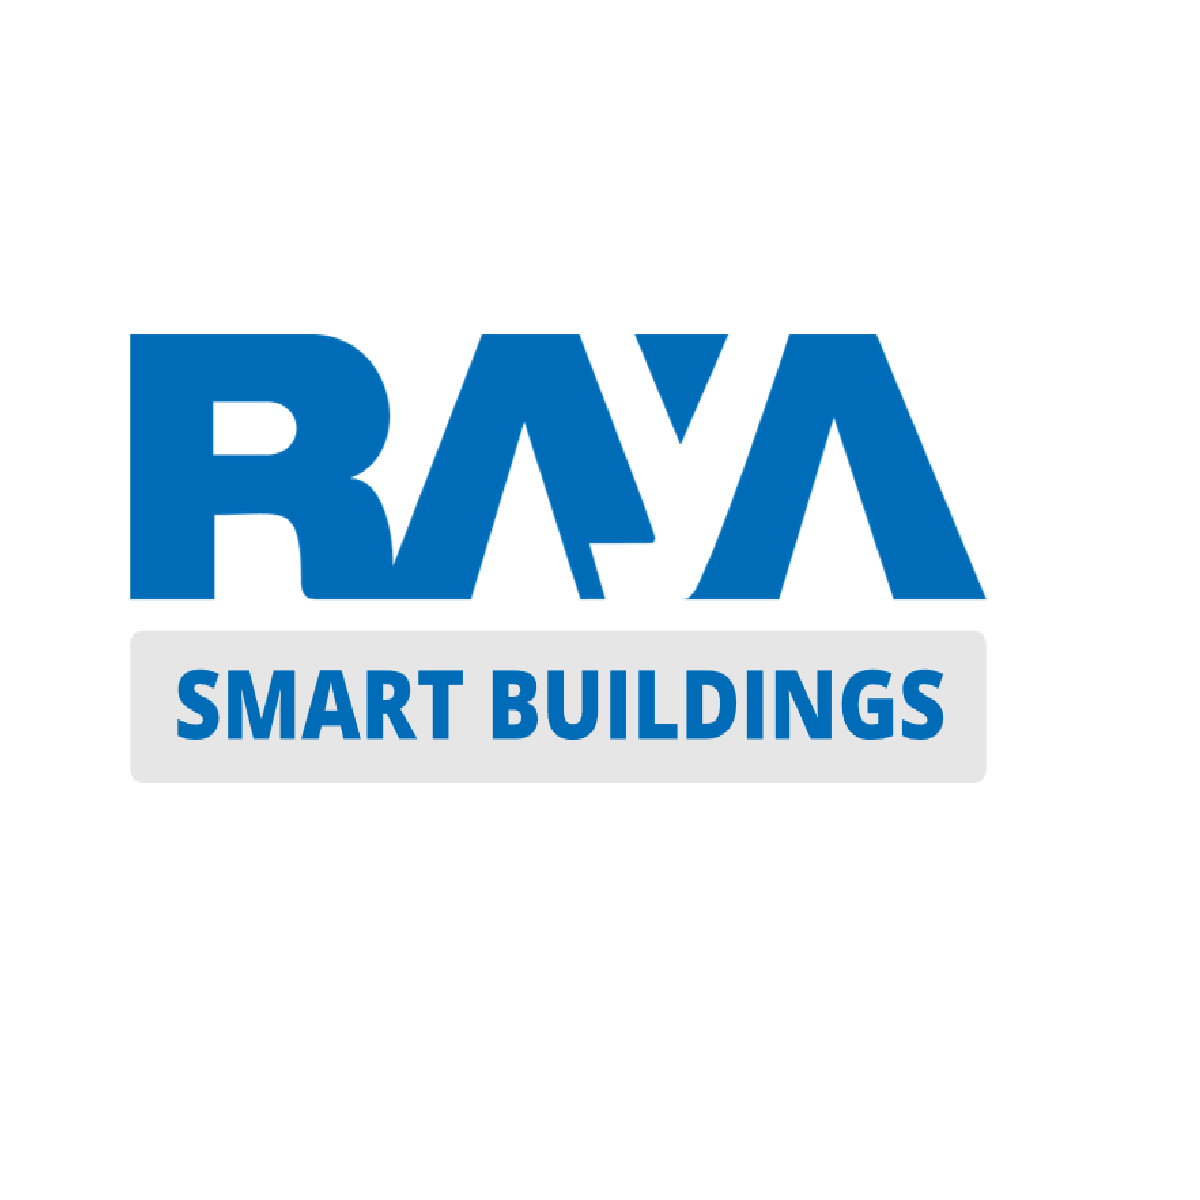 Raya Smart Buildings